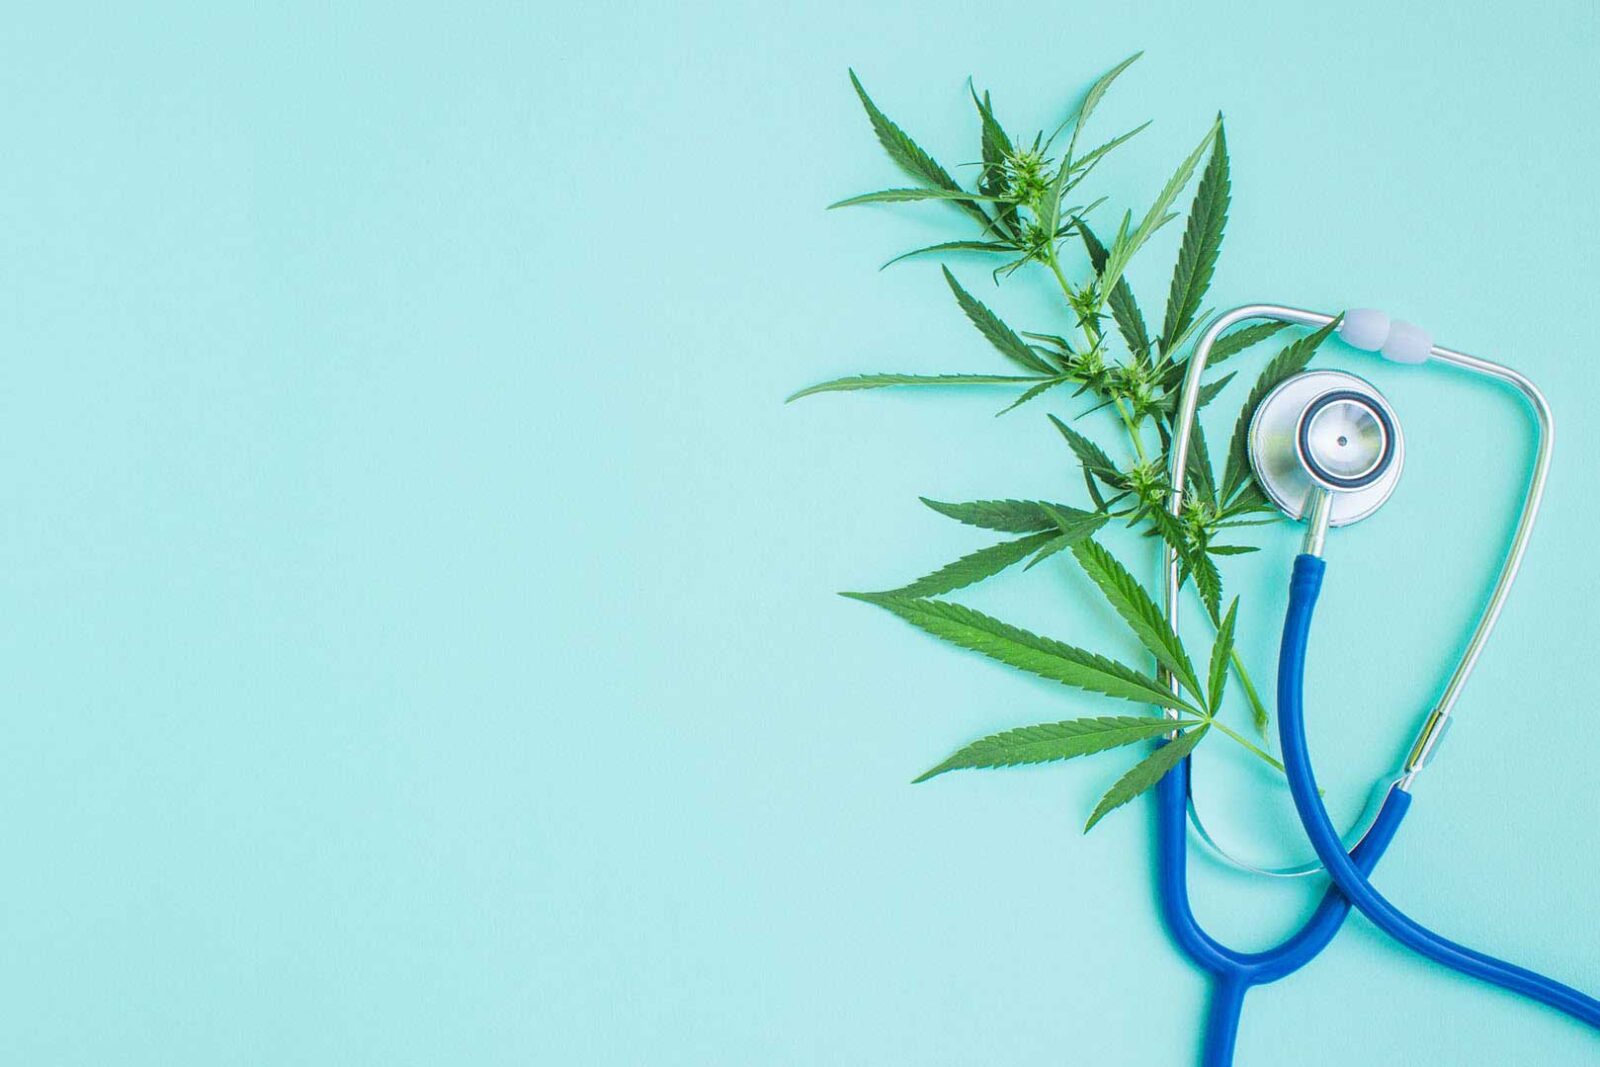 Medical marijuana and stethoscope. Green leaves of cannabis. Emp